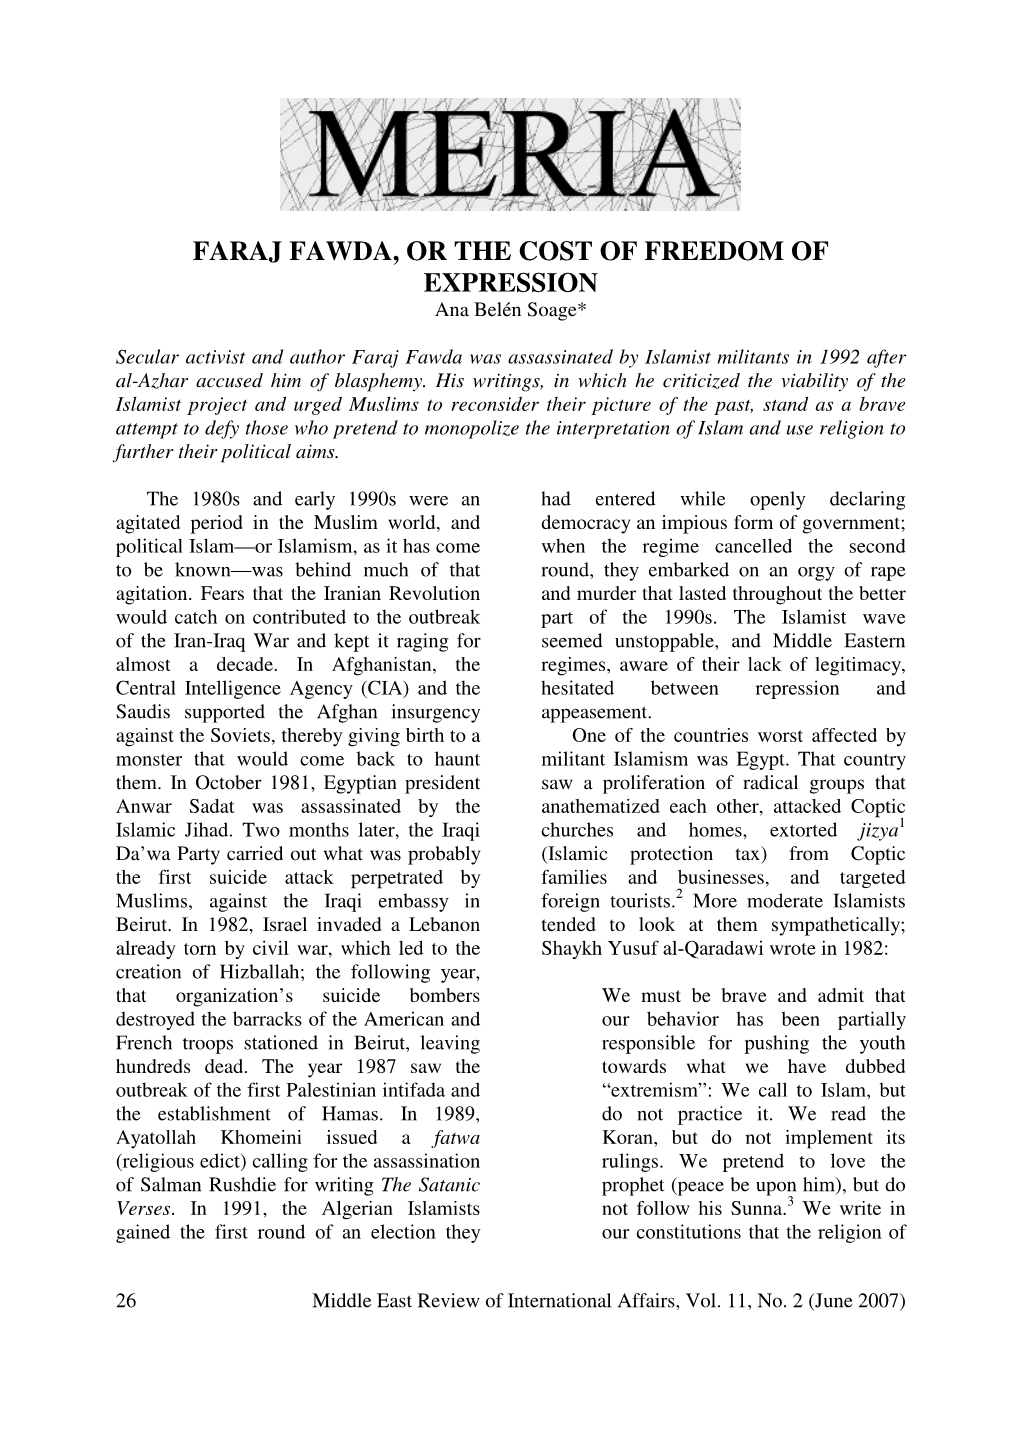 Faraj Fawda and the Cost of Free Speech -- MERIA -- June 2007